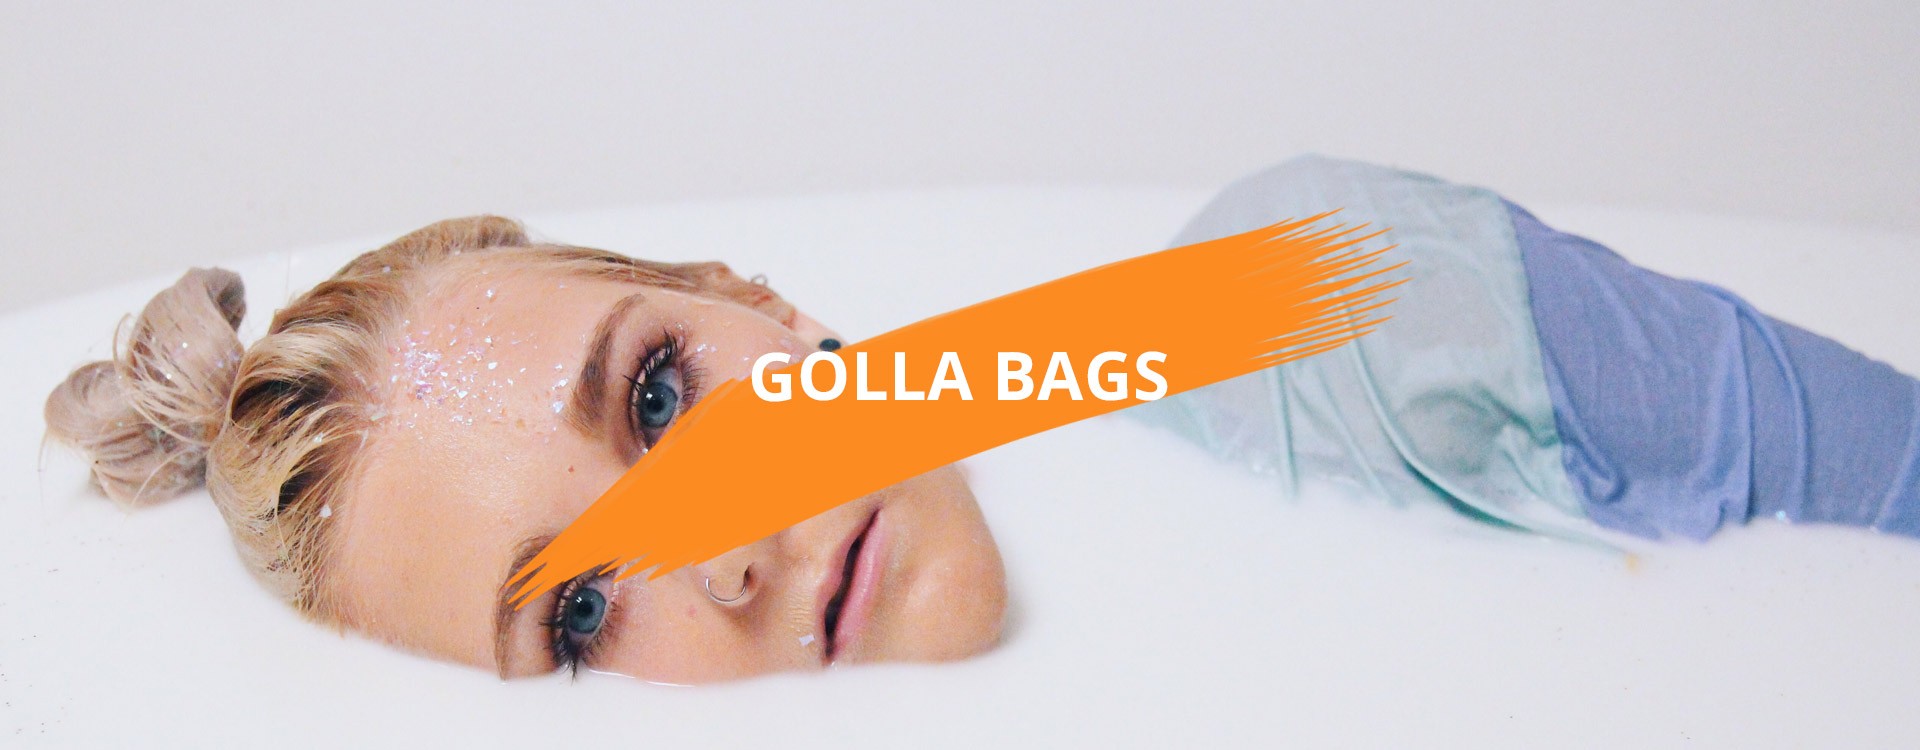 Golla bags